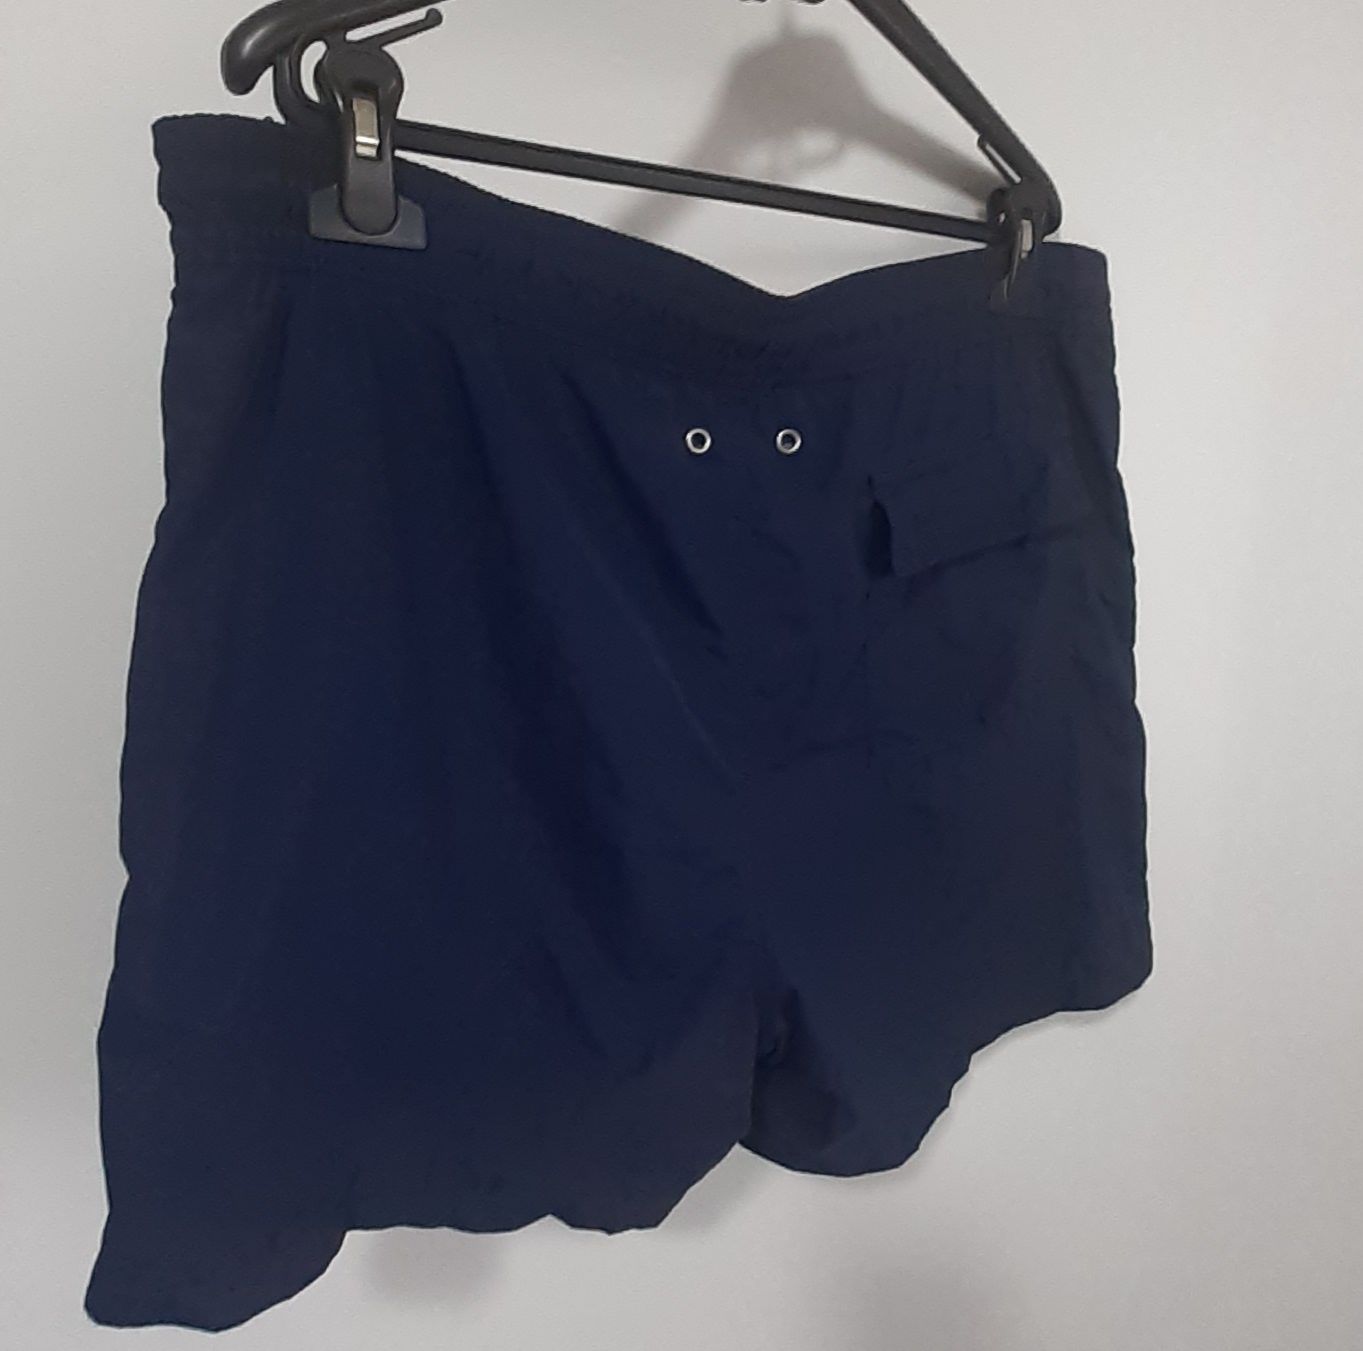 Pantaloni scurti Short Ralph Lauren Marimea M 98 cm talie. Originali.